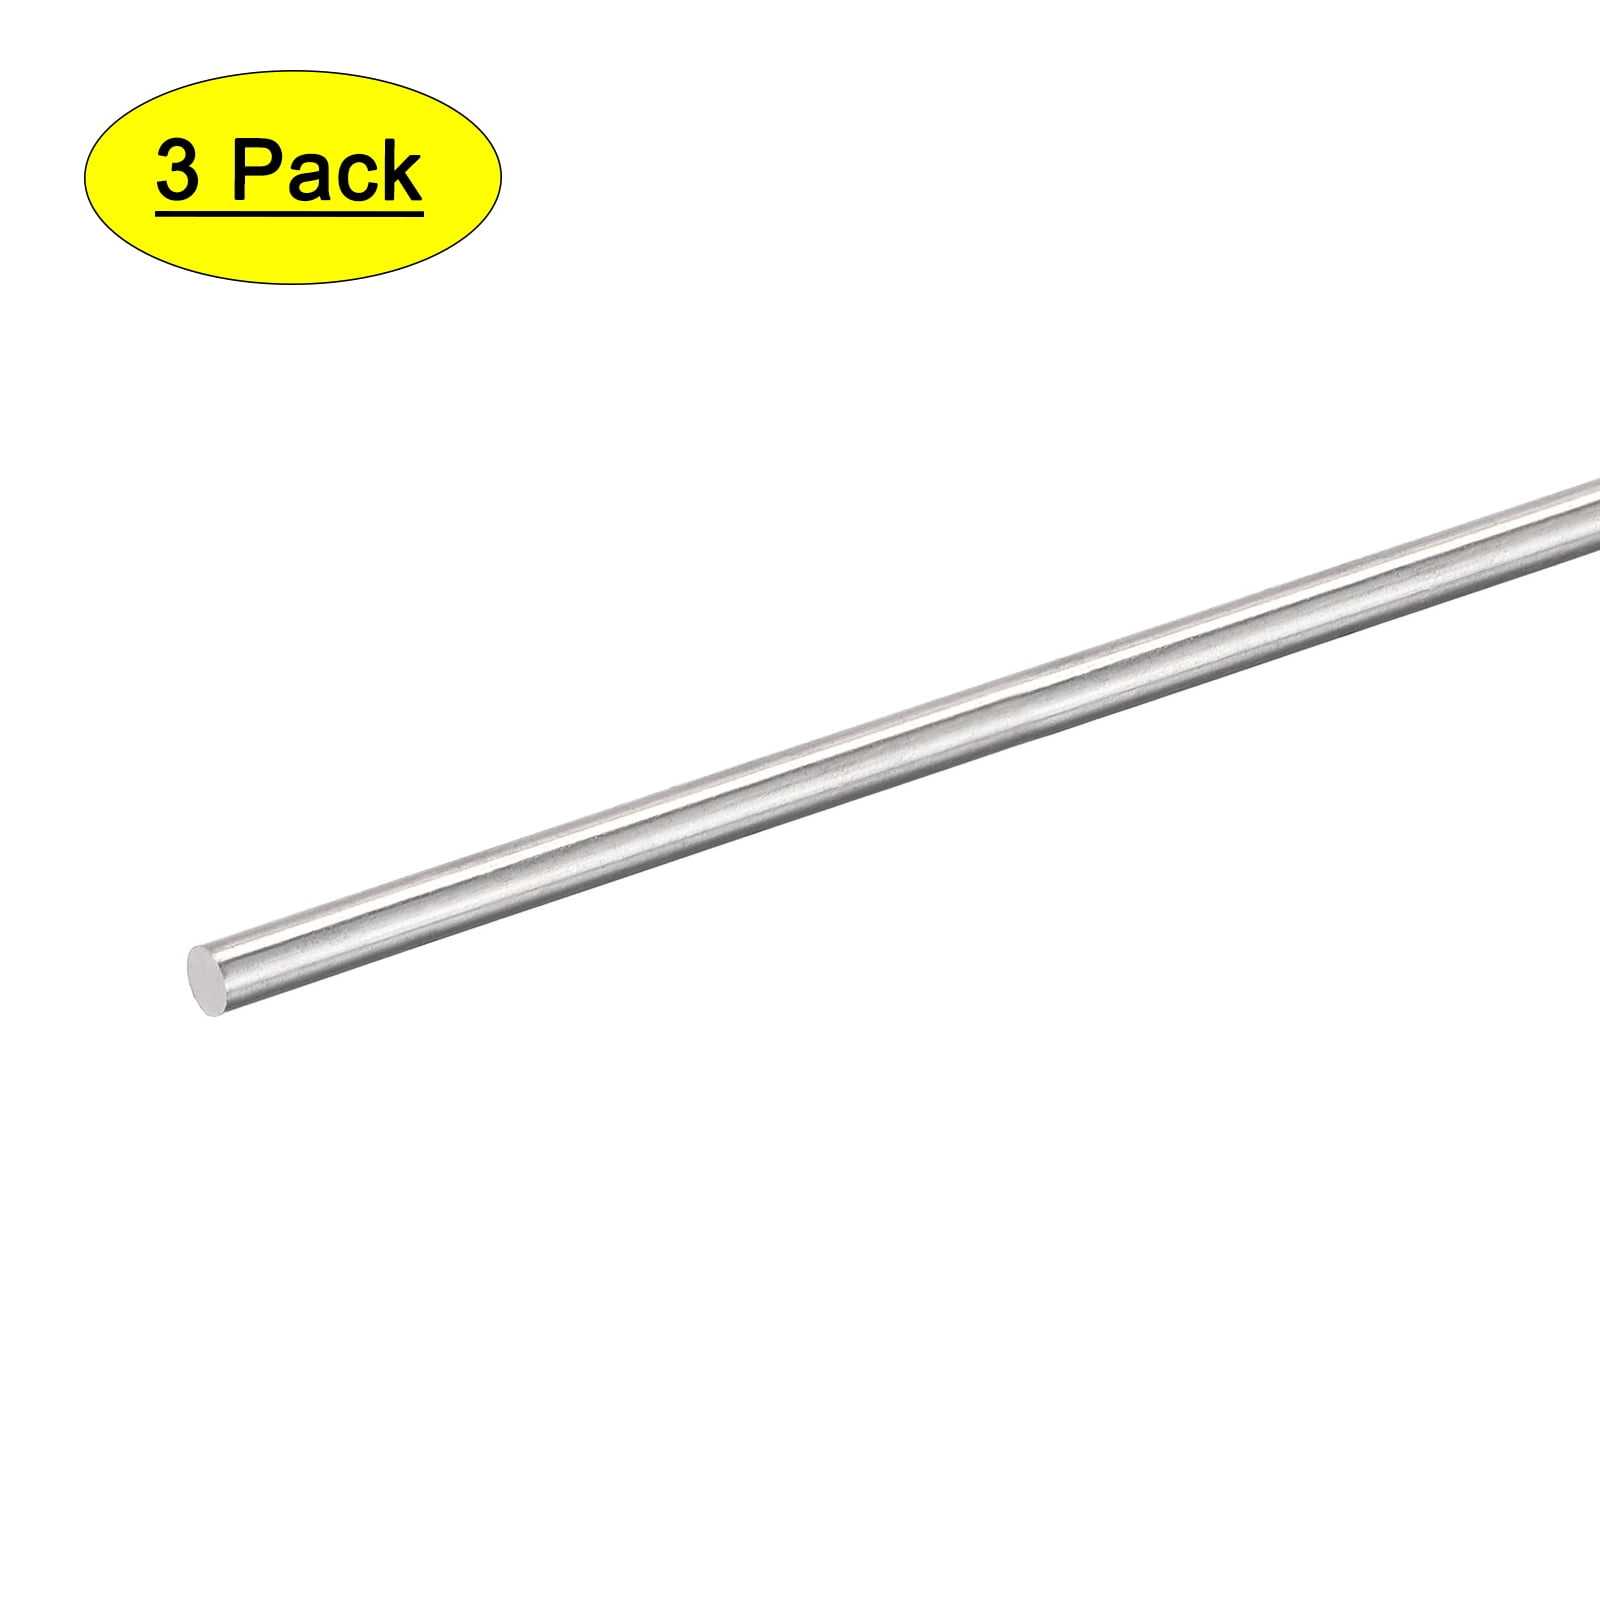 MECCANIXITY Aluminum Solid Round Rod 2mm Diameter 250mm Length Lathe Bar Stock for DIY Craft Pack of 20Pcs 